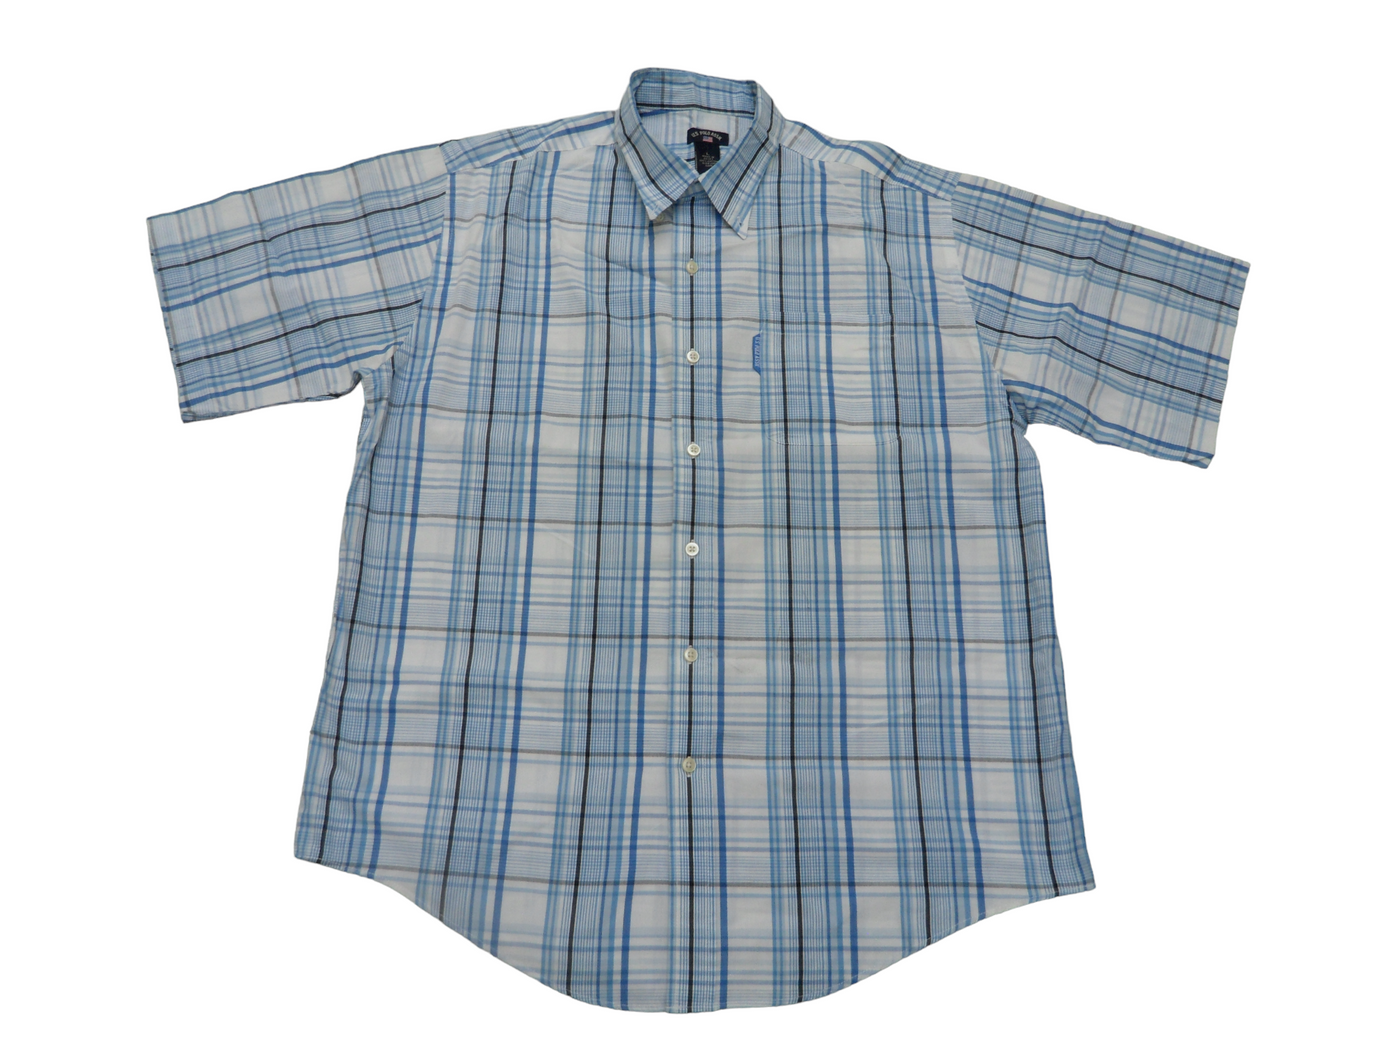 Vintage US POLO Assn Men's Short Sleeve Shirt Cotton White with Light Blue Checks